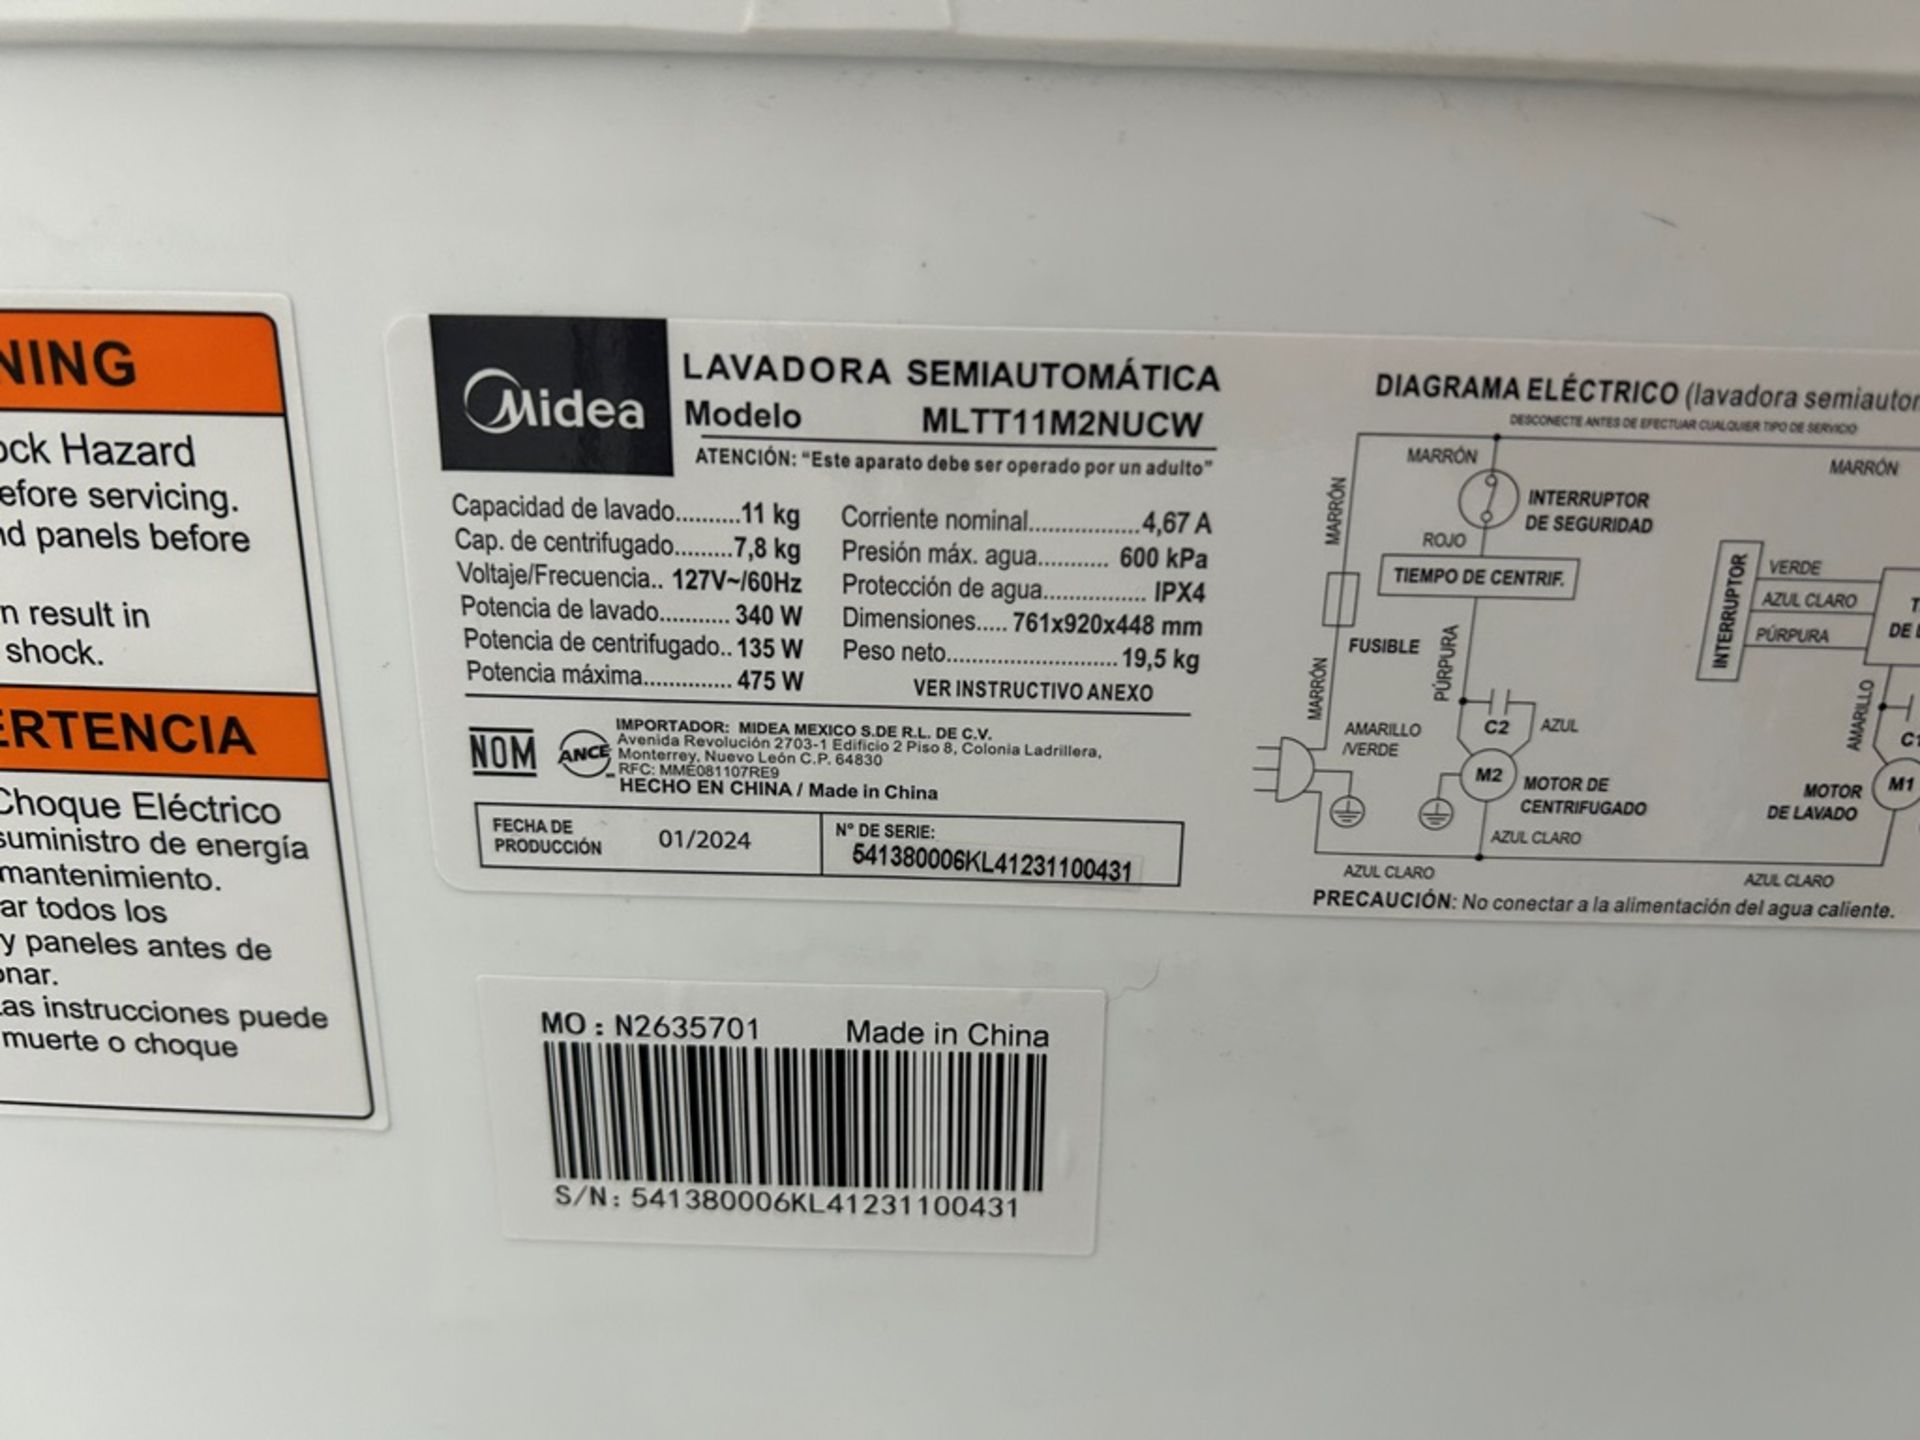 Lote de 2 lavadoras contiene: 1 Lavadora de 19 KG, Marca KOBLENZ, Modelo LMD19B, Serie 02599, Color - Image 6 of 10